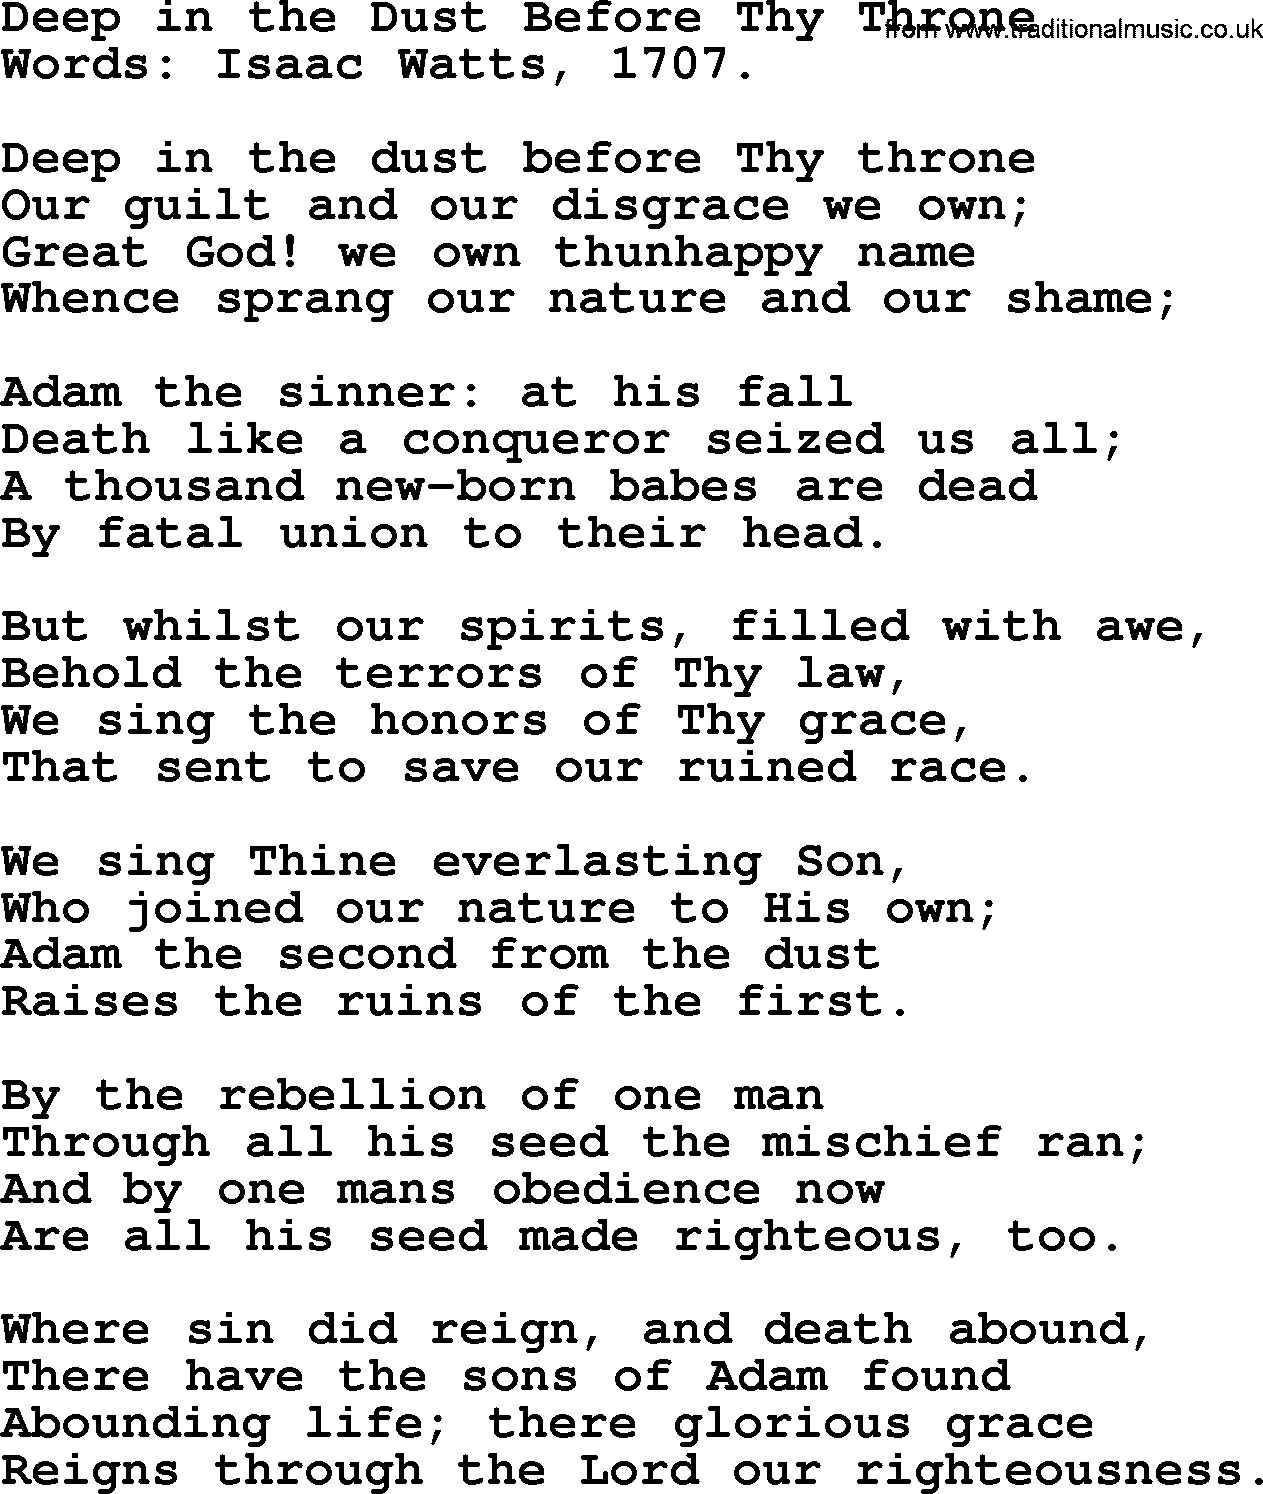 Isaac Watts Christian hymn: Deep in the Dust Before Thy Throne- lyricss